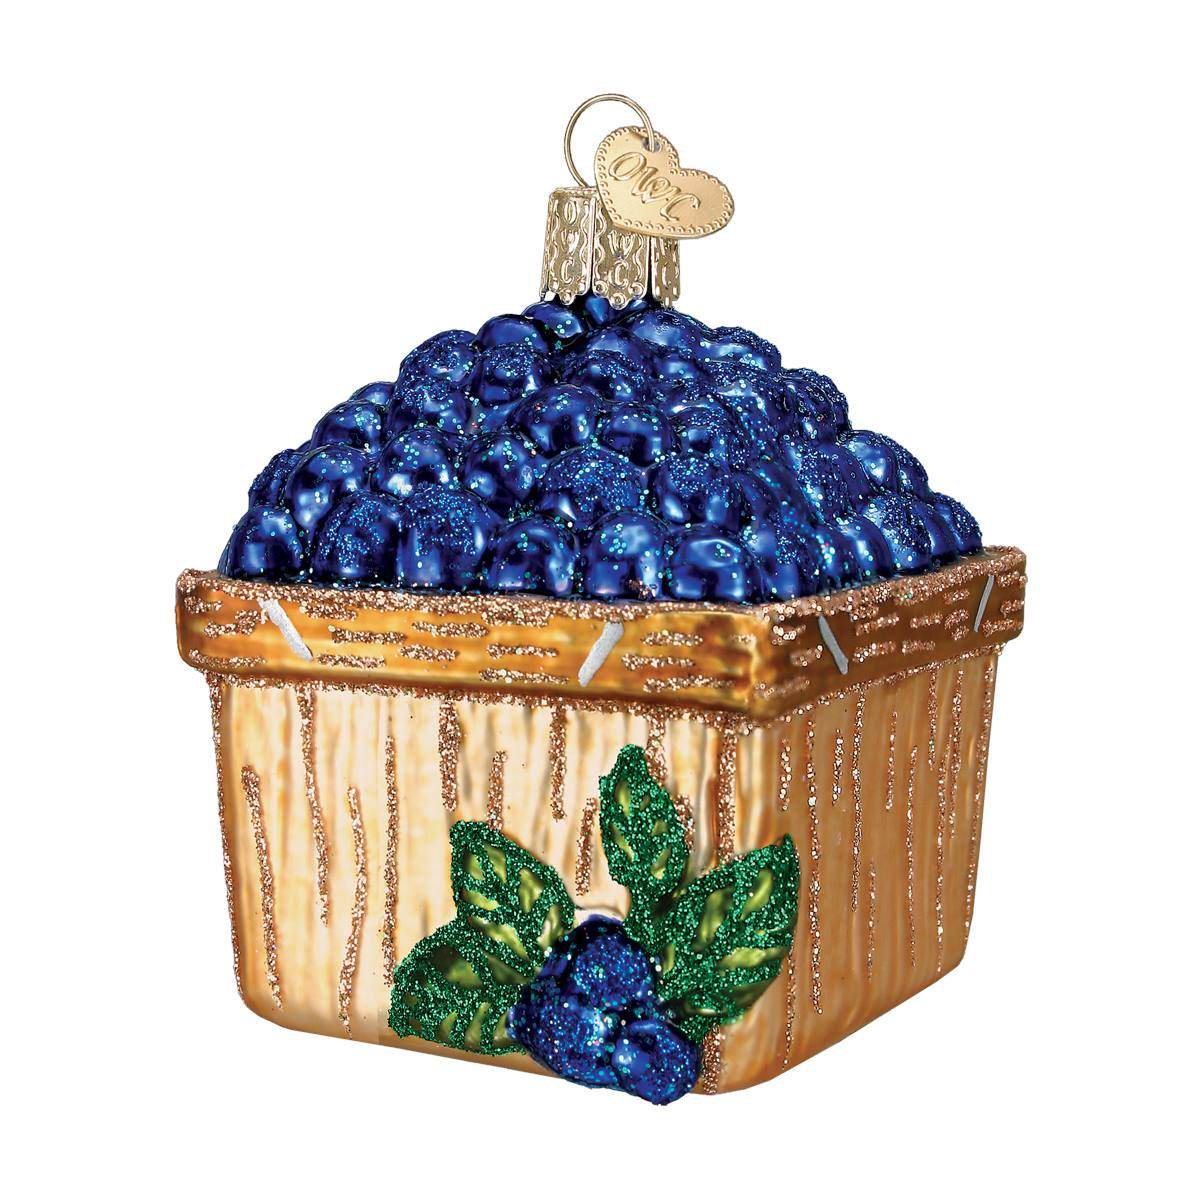 Basket of Blueberries Ornament